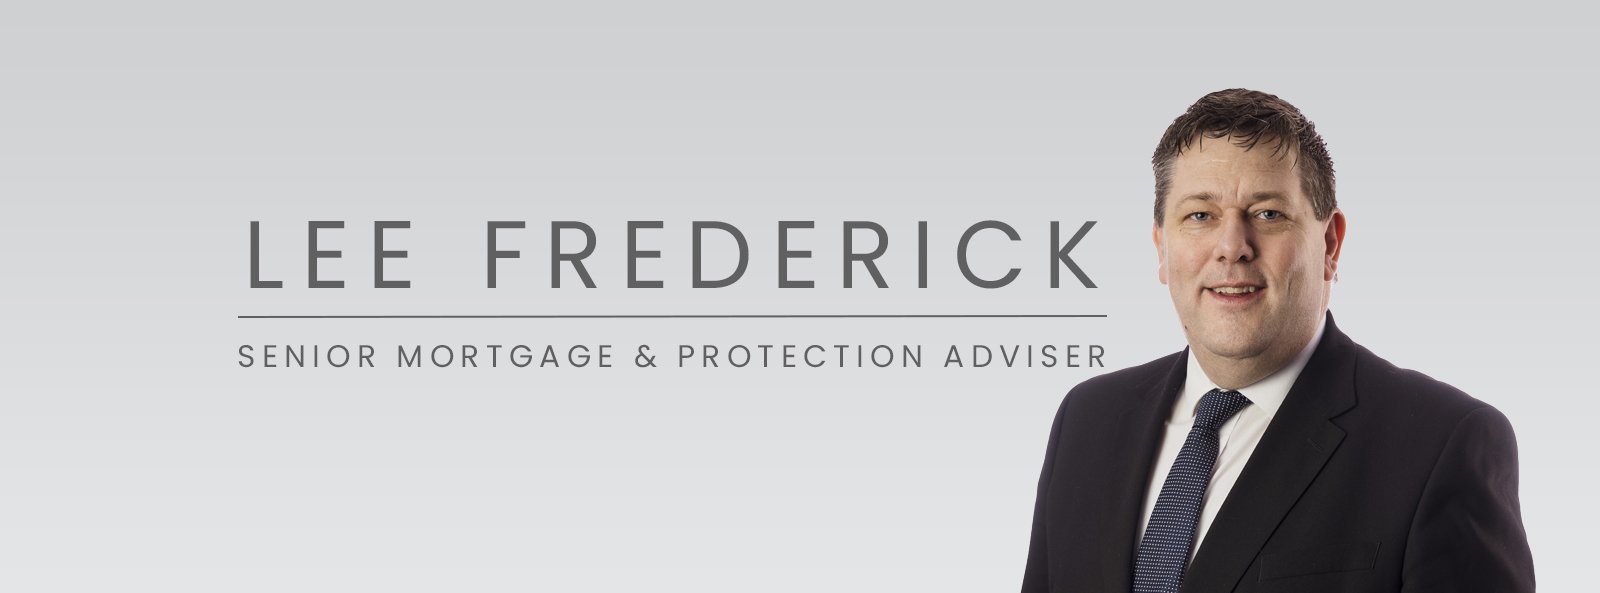 Lee Frederick Mortgage Adviser Gloucester